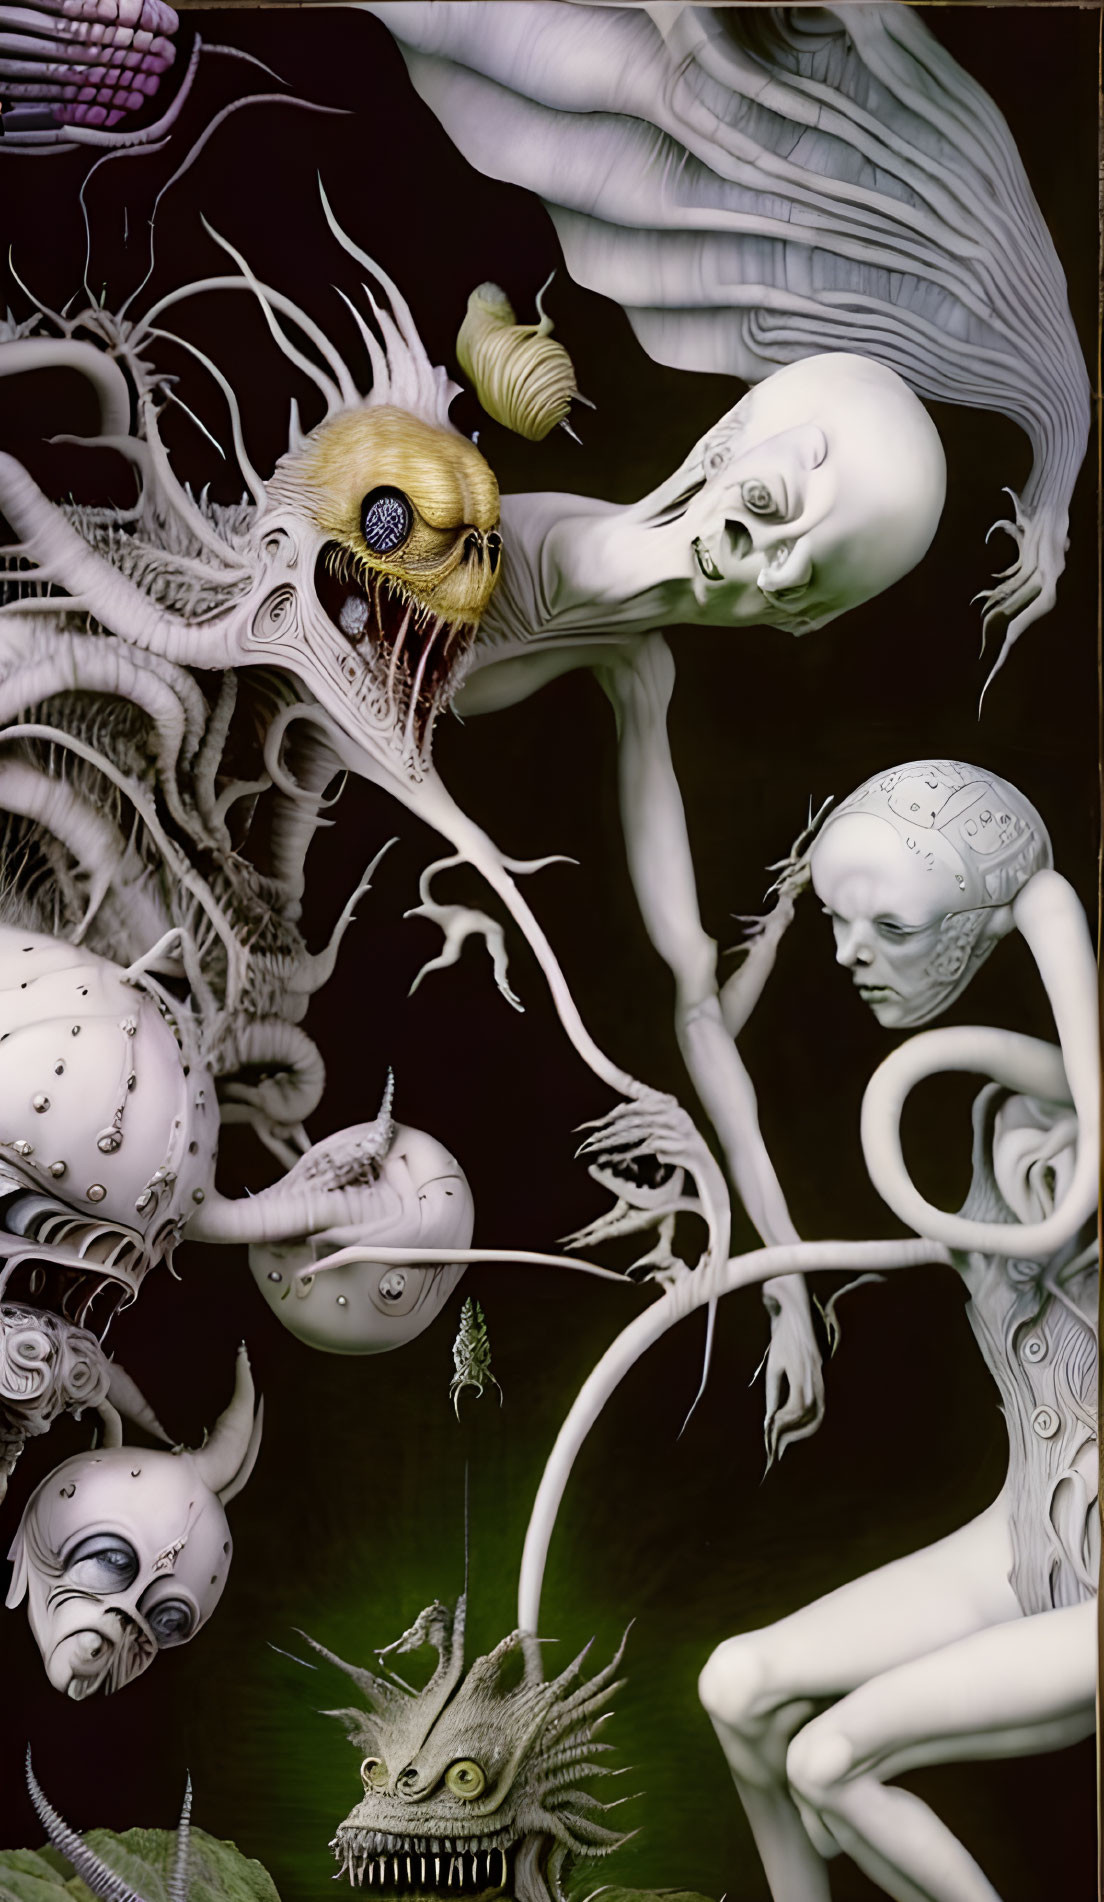 Surreal Artwork: Humanoid Figures & Fantastical Creatures in Dark, Monochromatic